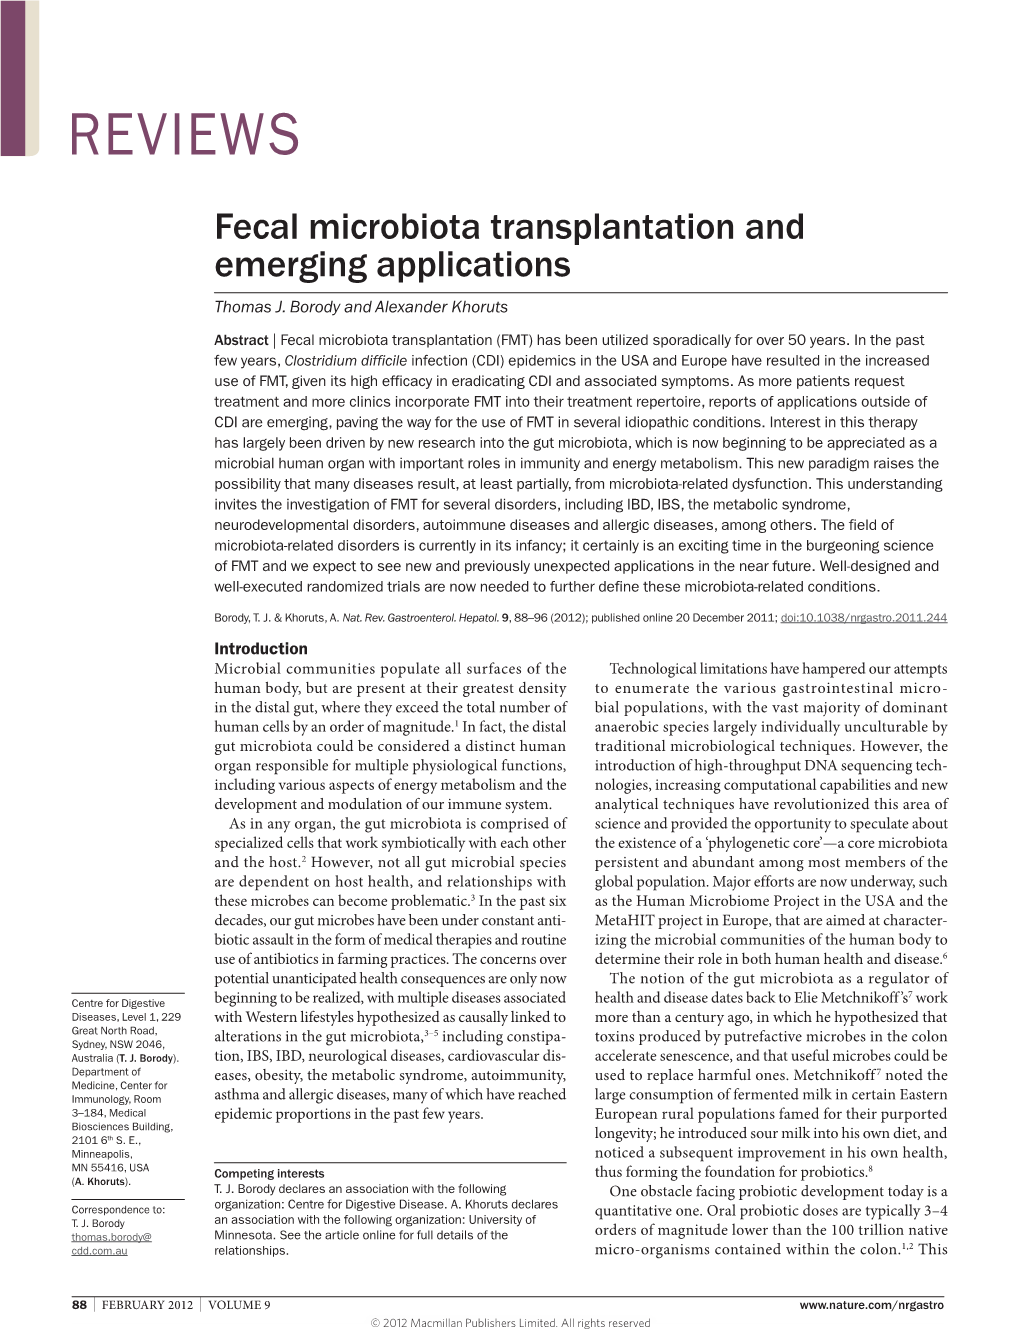 Fecal Microbiota Transplantation and Emerging Applications Thomas J